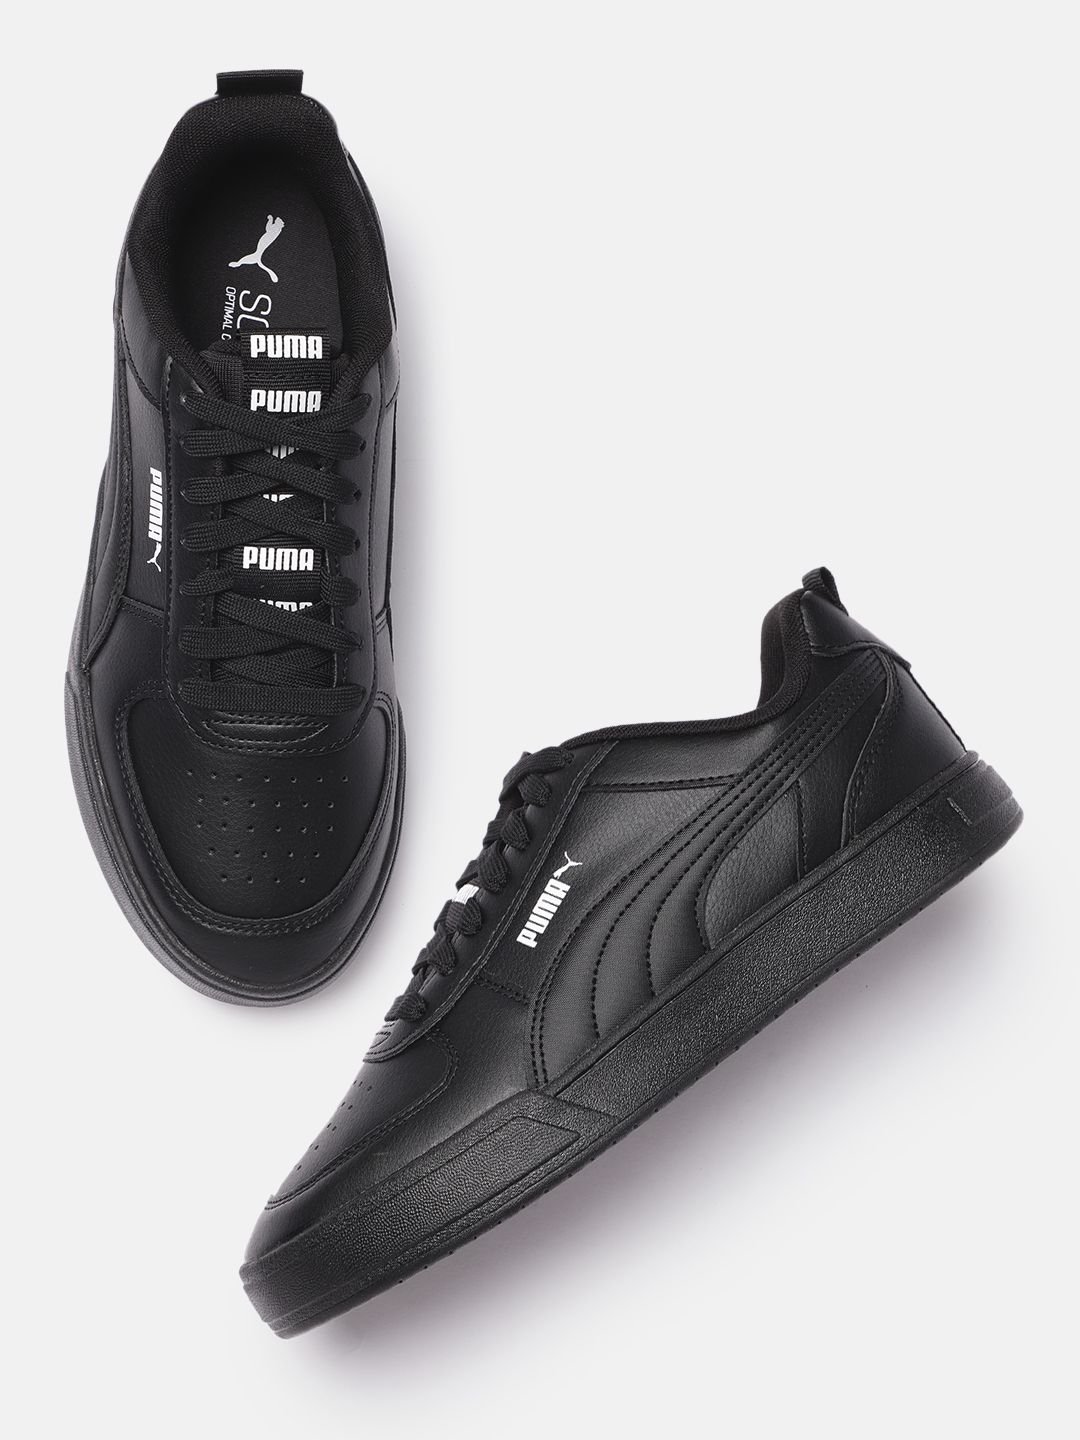 Puma Unisex Black Caven Tape Leather Sneakers Price in India